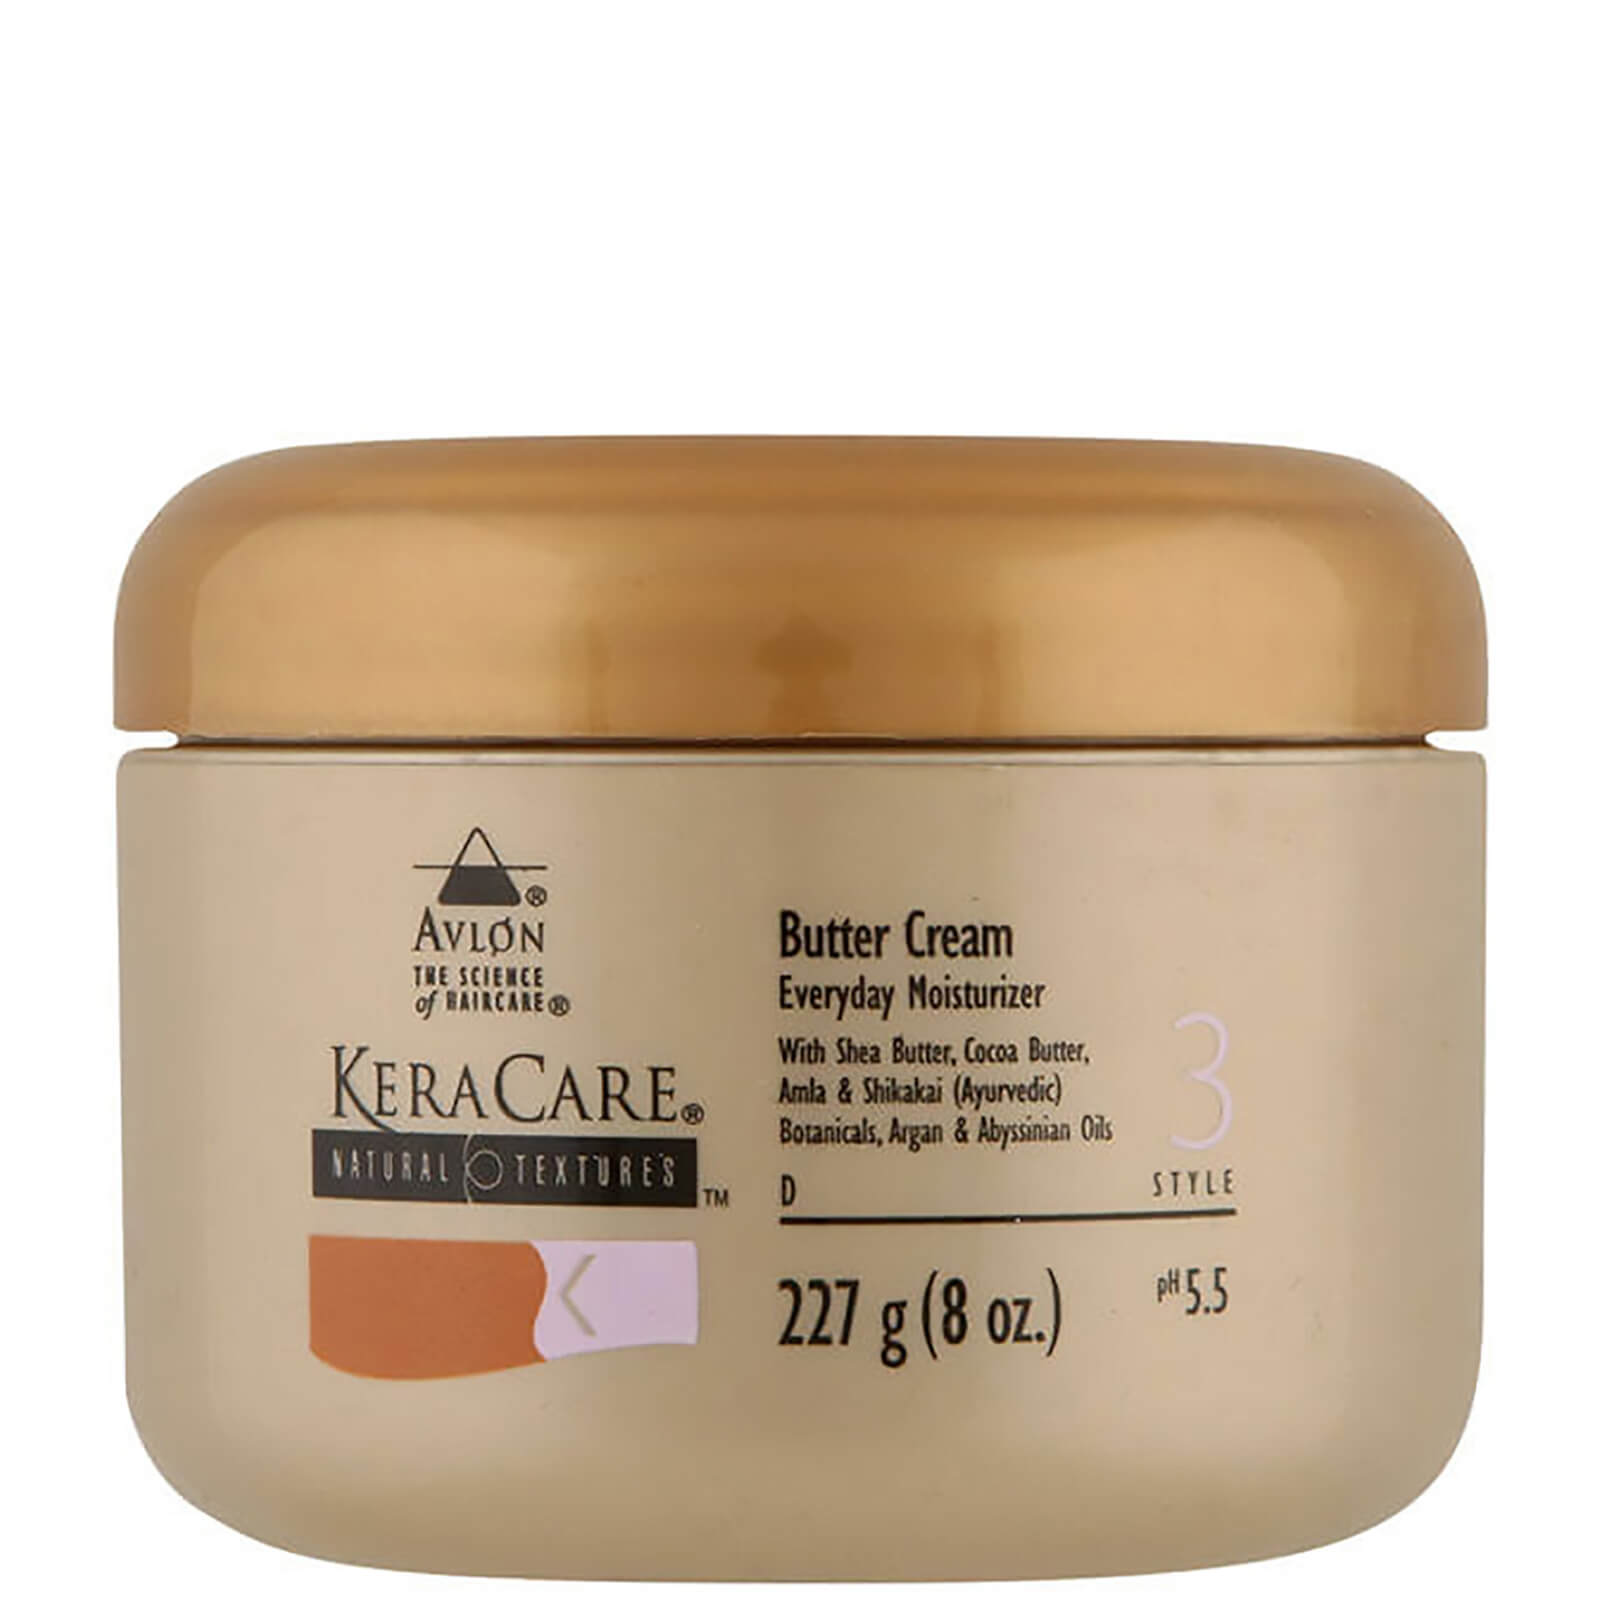 Keracare Natural Textures Butter Cream 227g von KeraCare